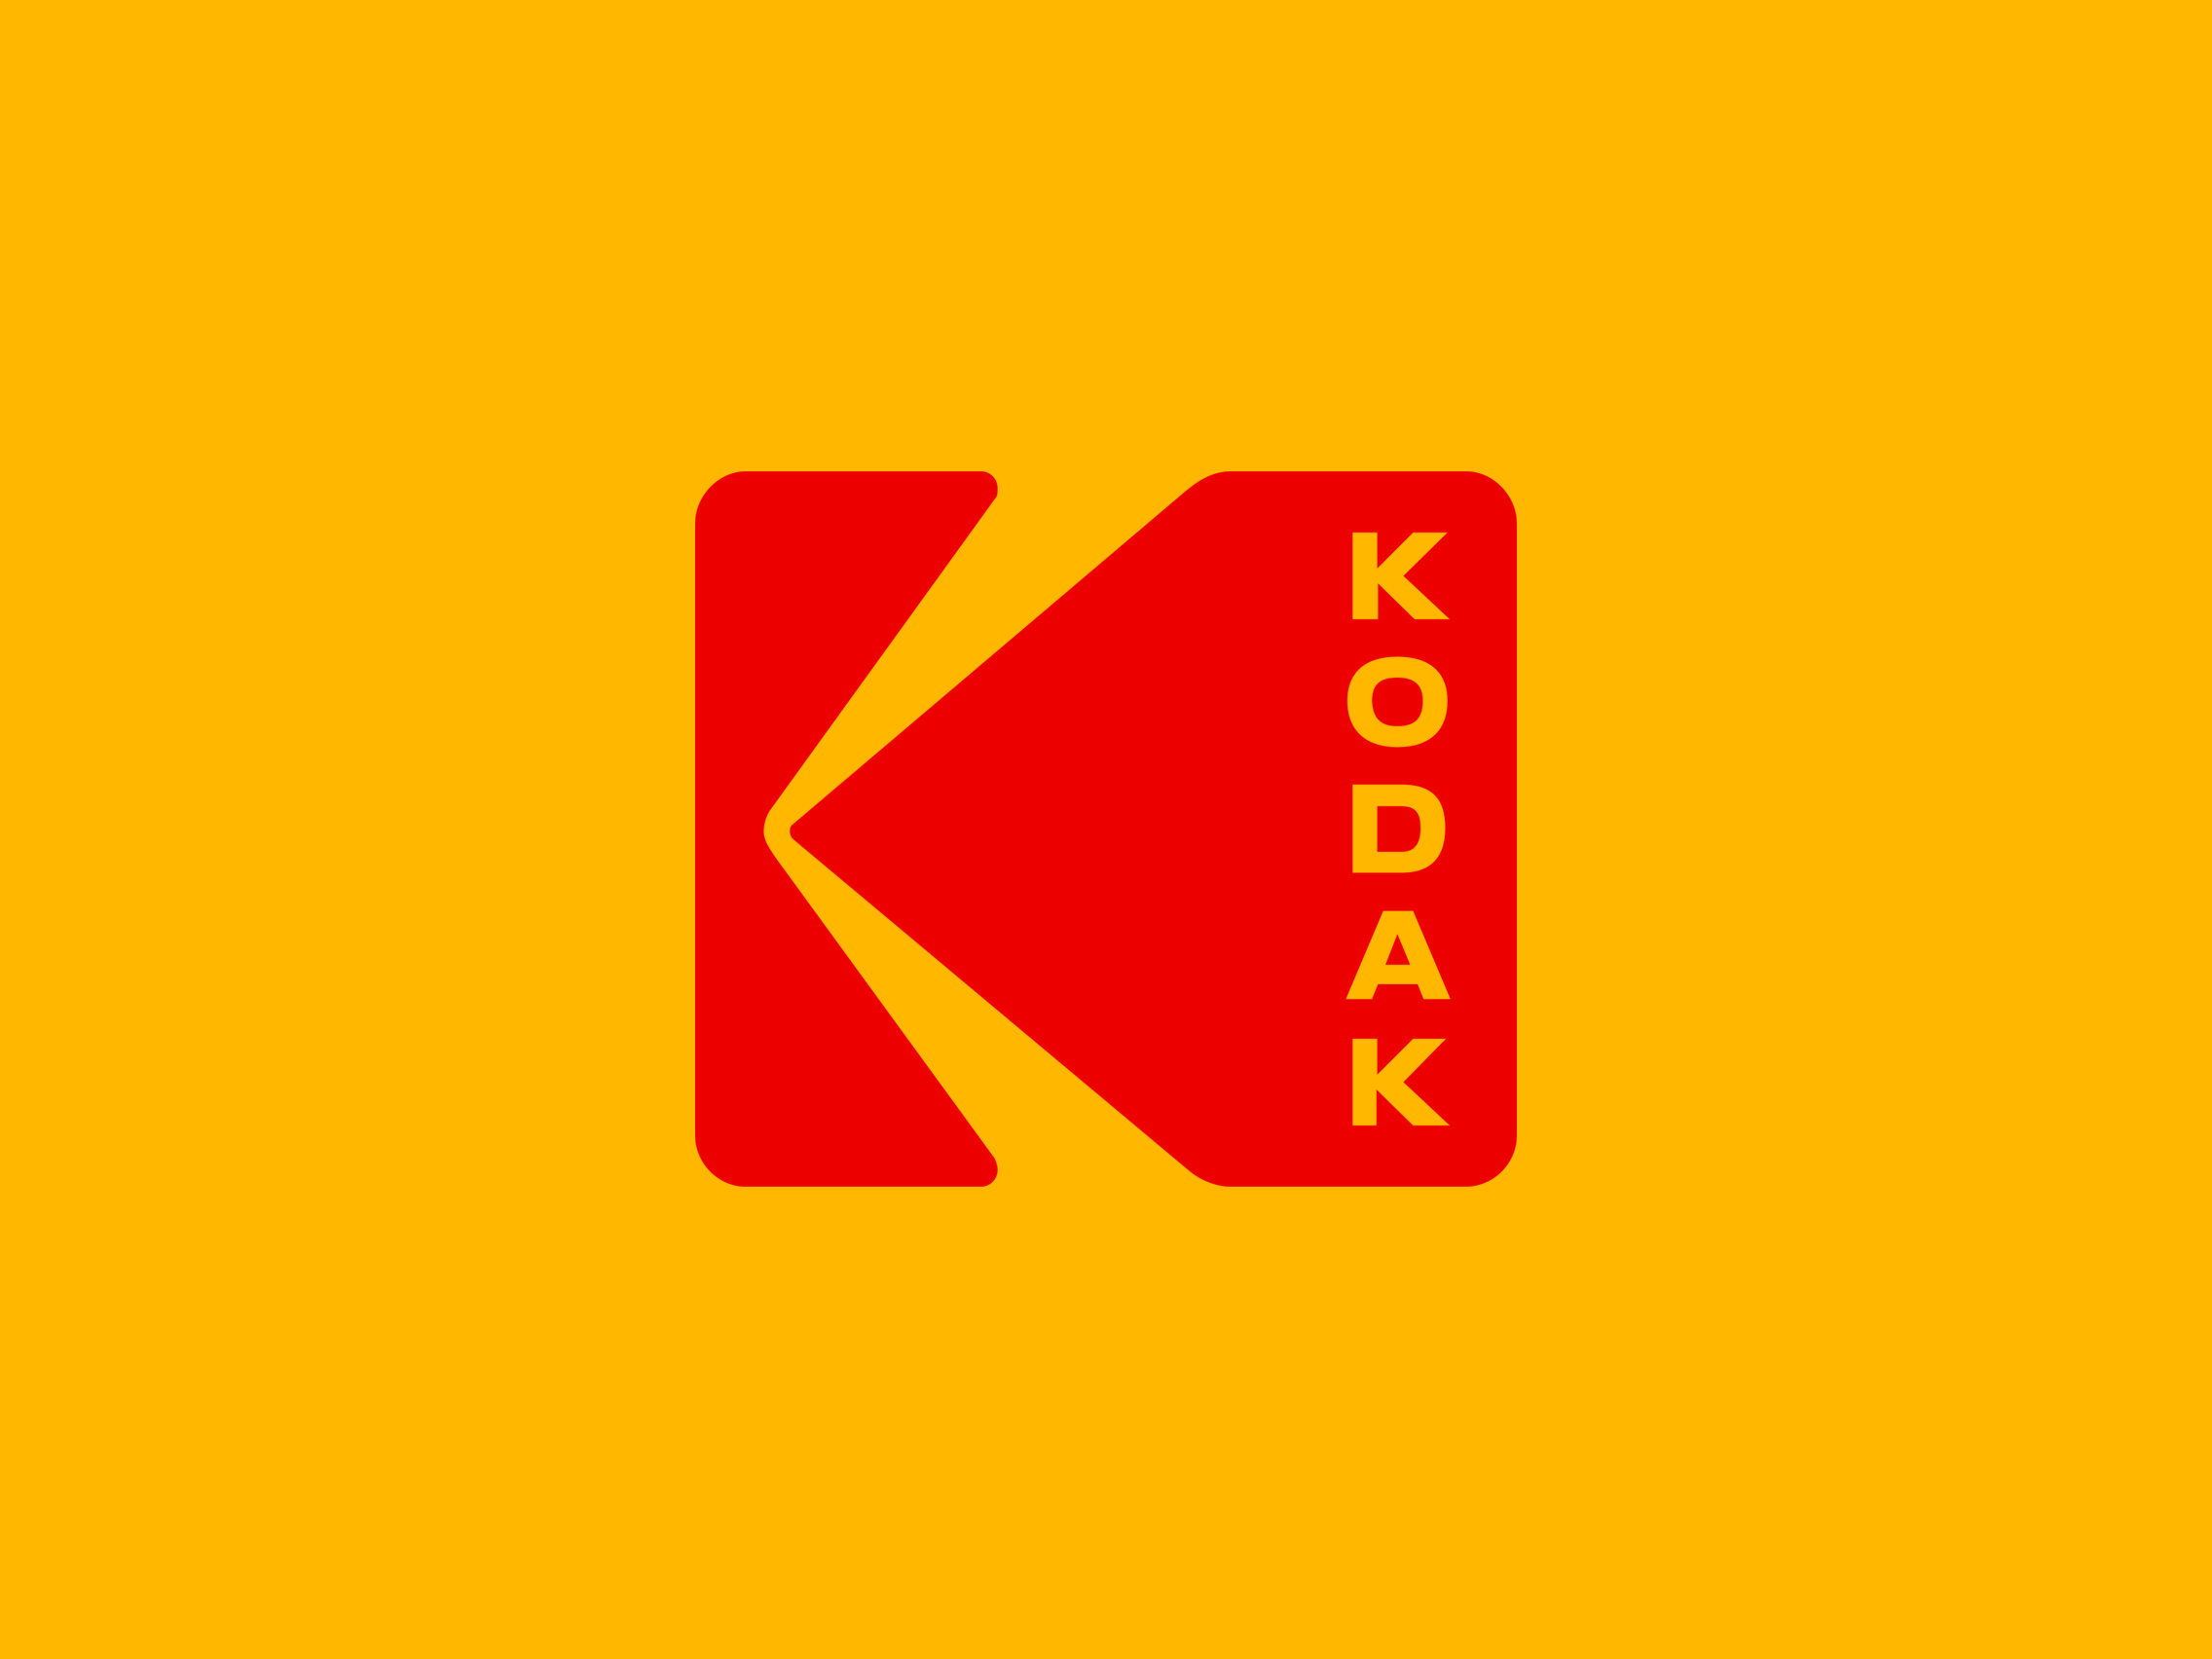 American with Red and Yellow Logo - kodak-logo-2016-red-on-yellow - Logok